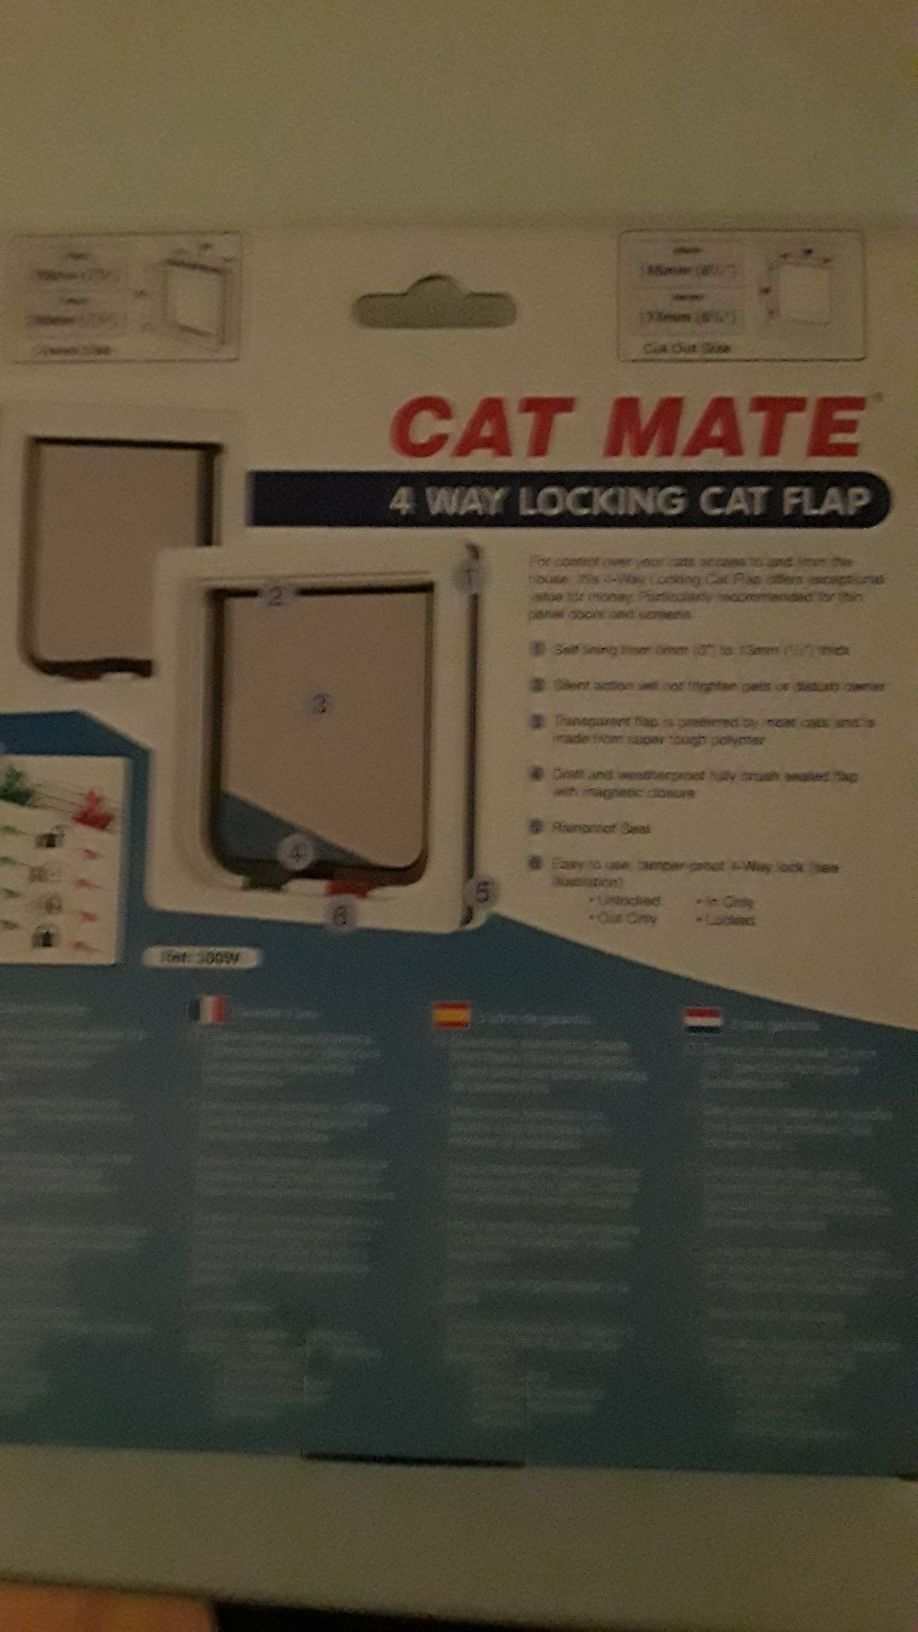 Cat Mate 4 way locking cat flap